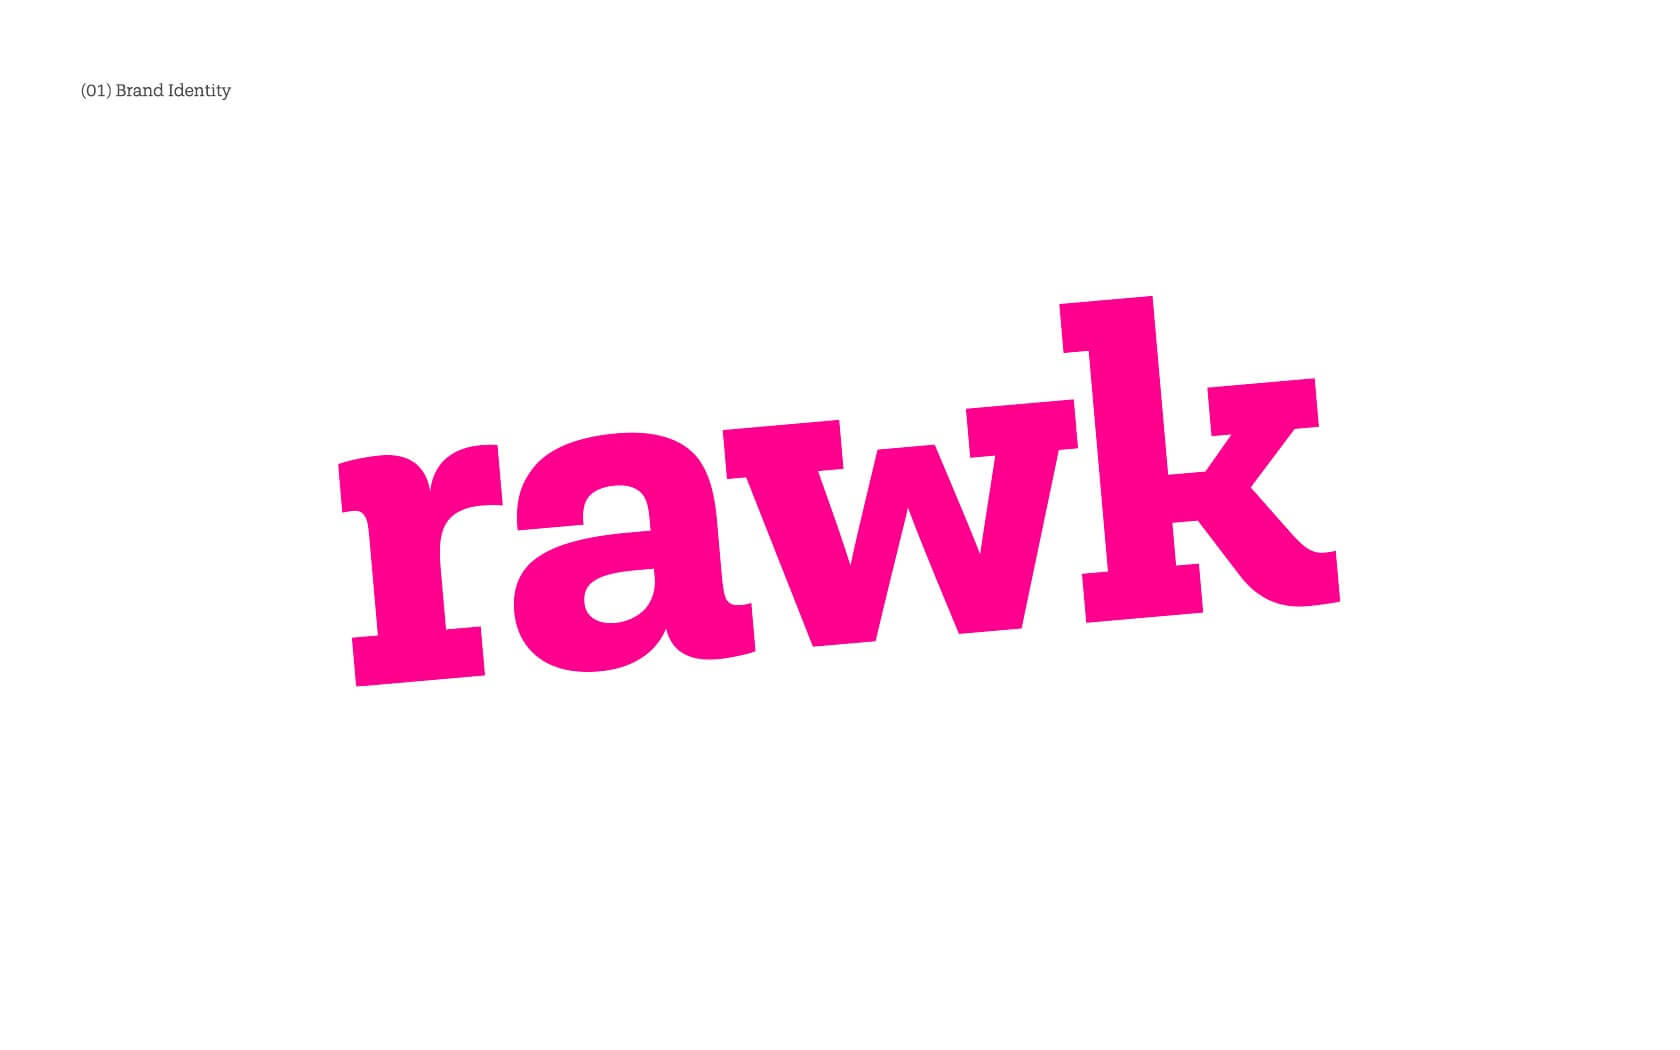 Rawk brand logo in pink